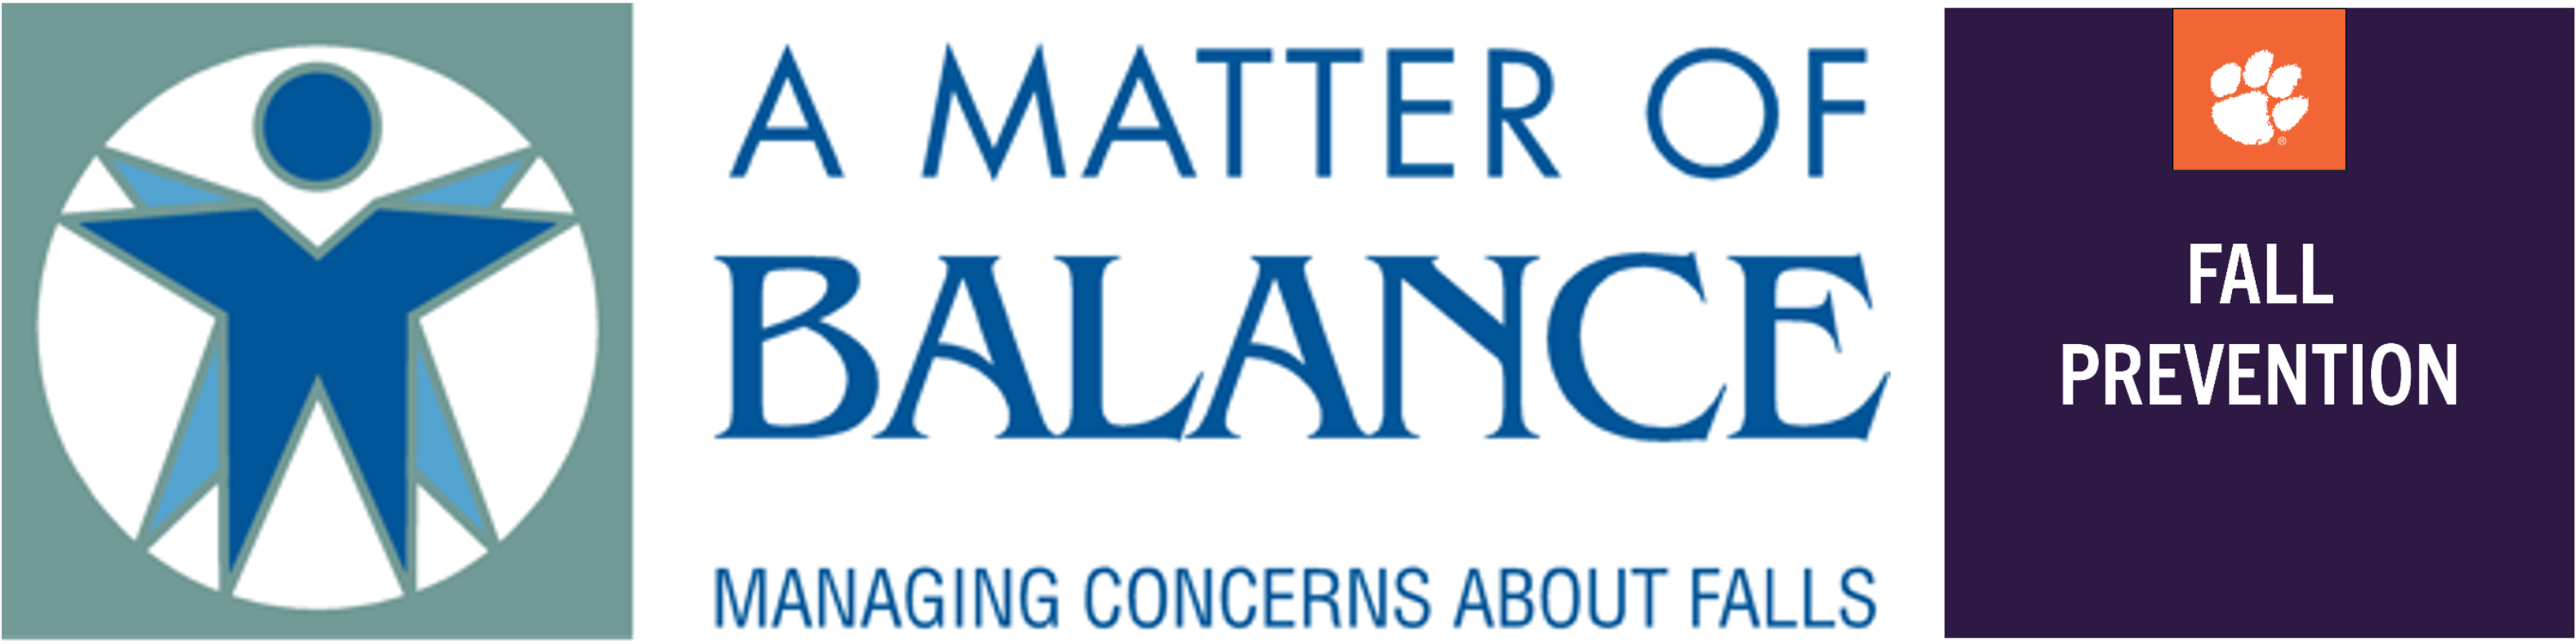 "A Matter of Balance: managing concerns about falls"